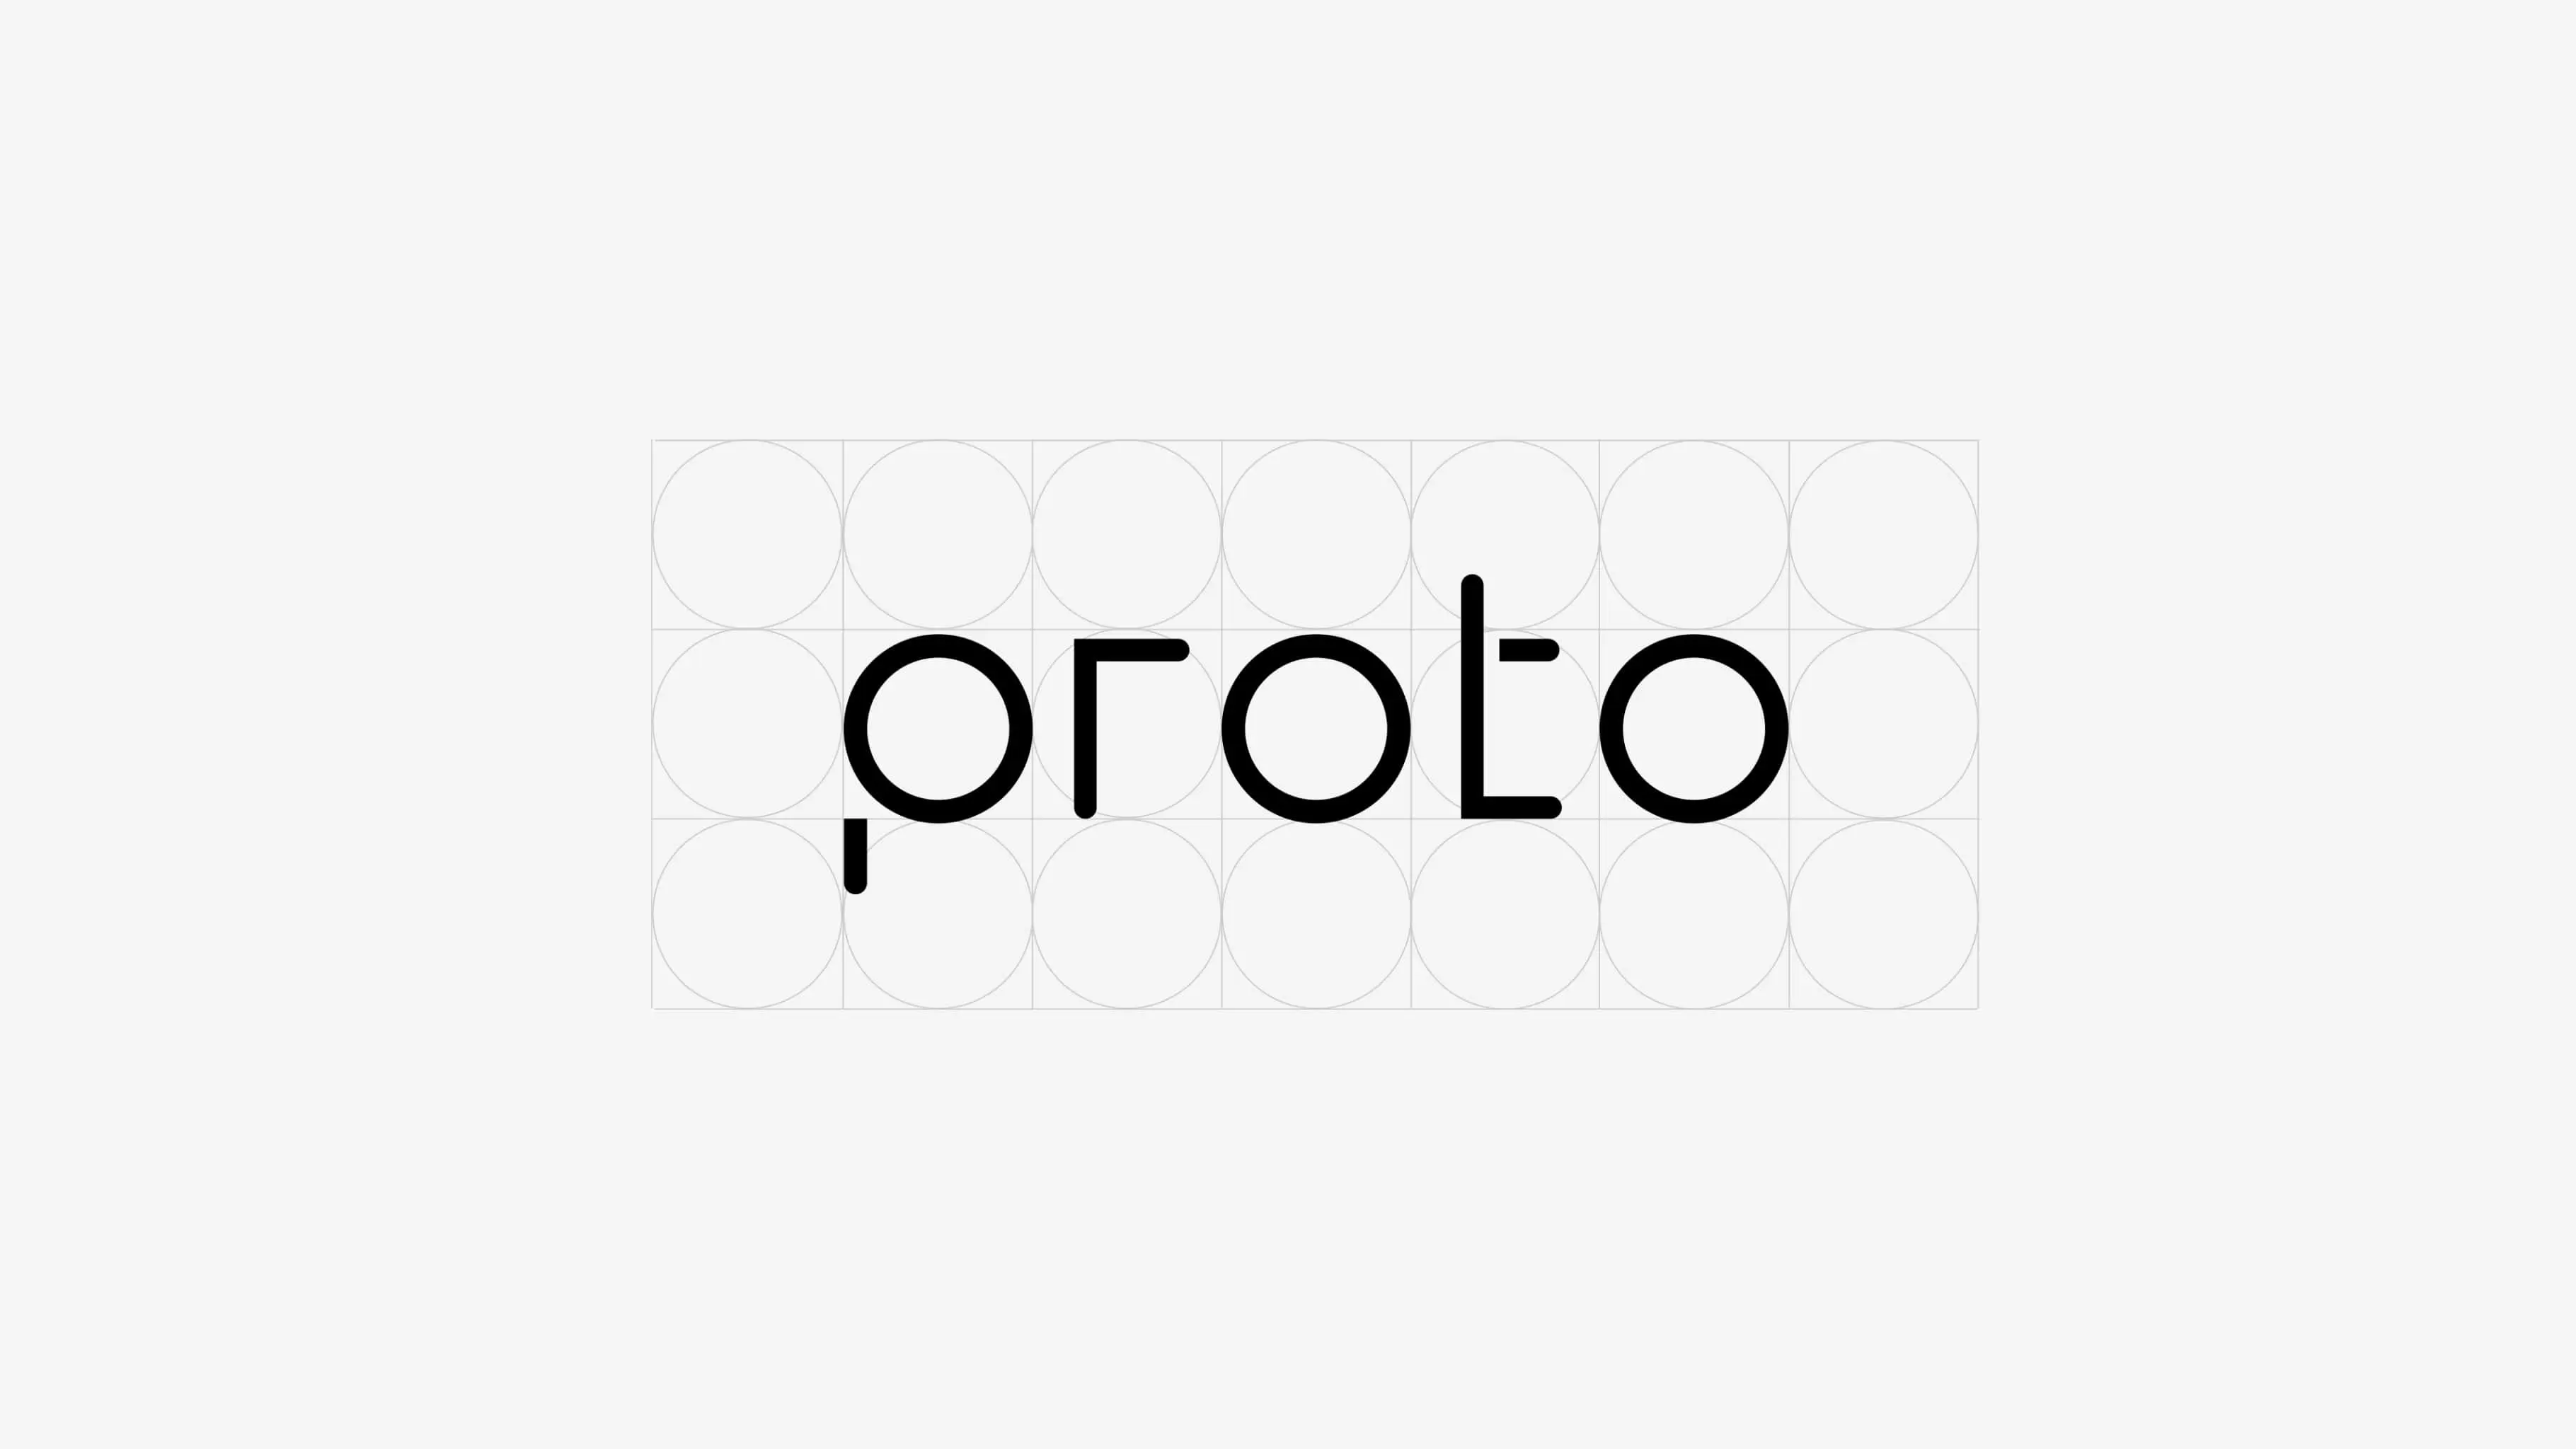 Proto logo construction